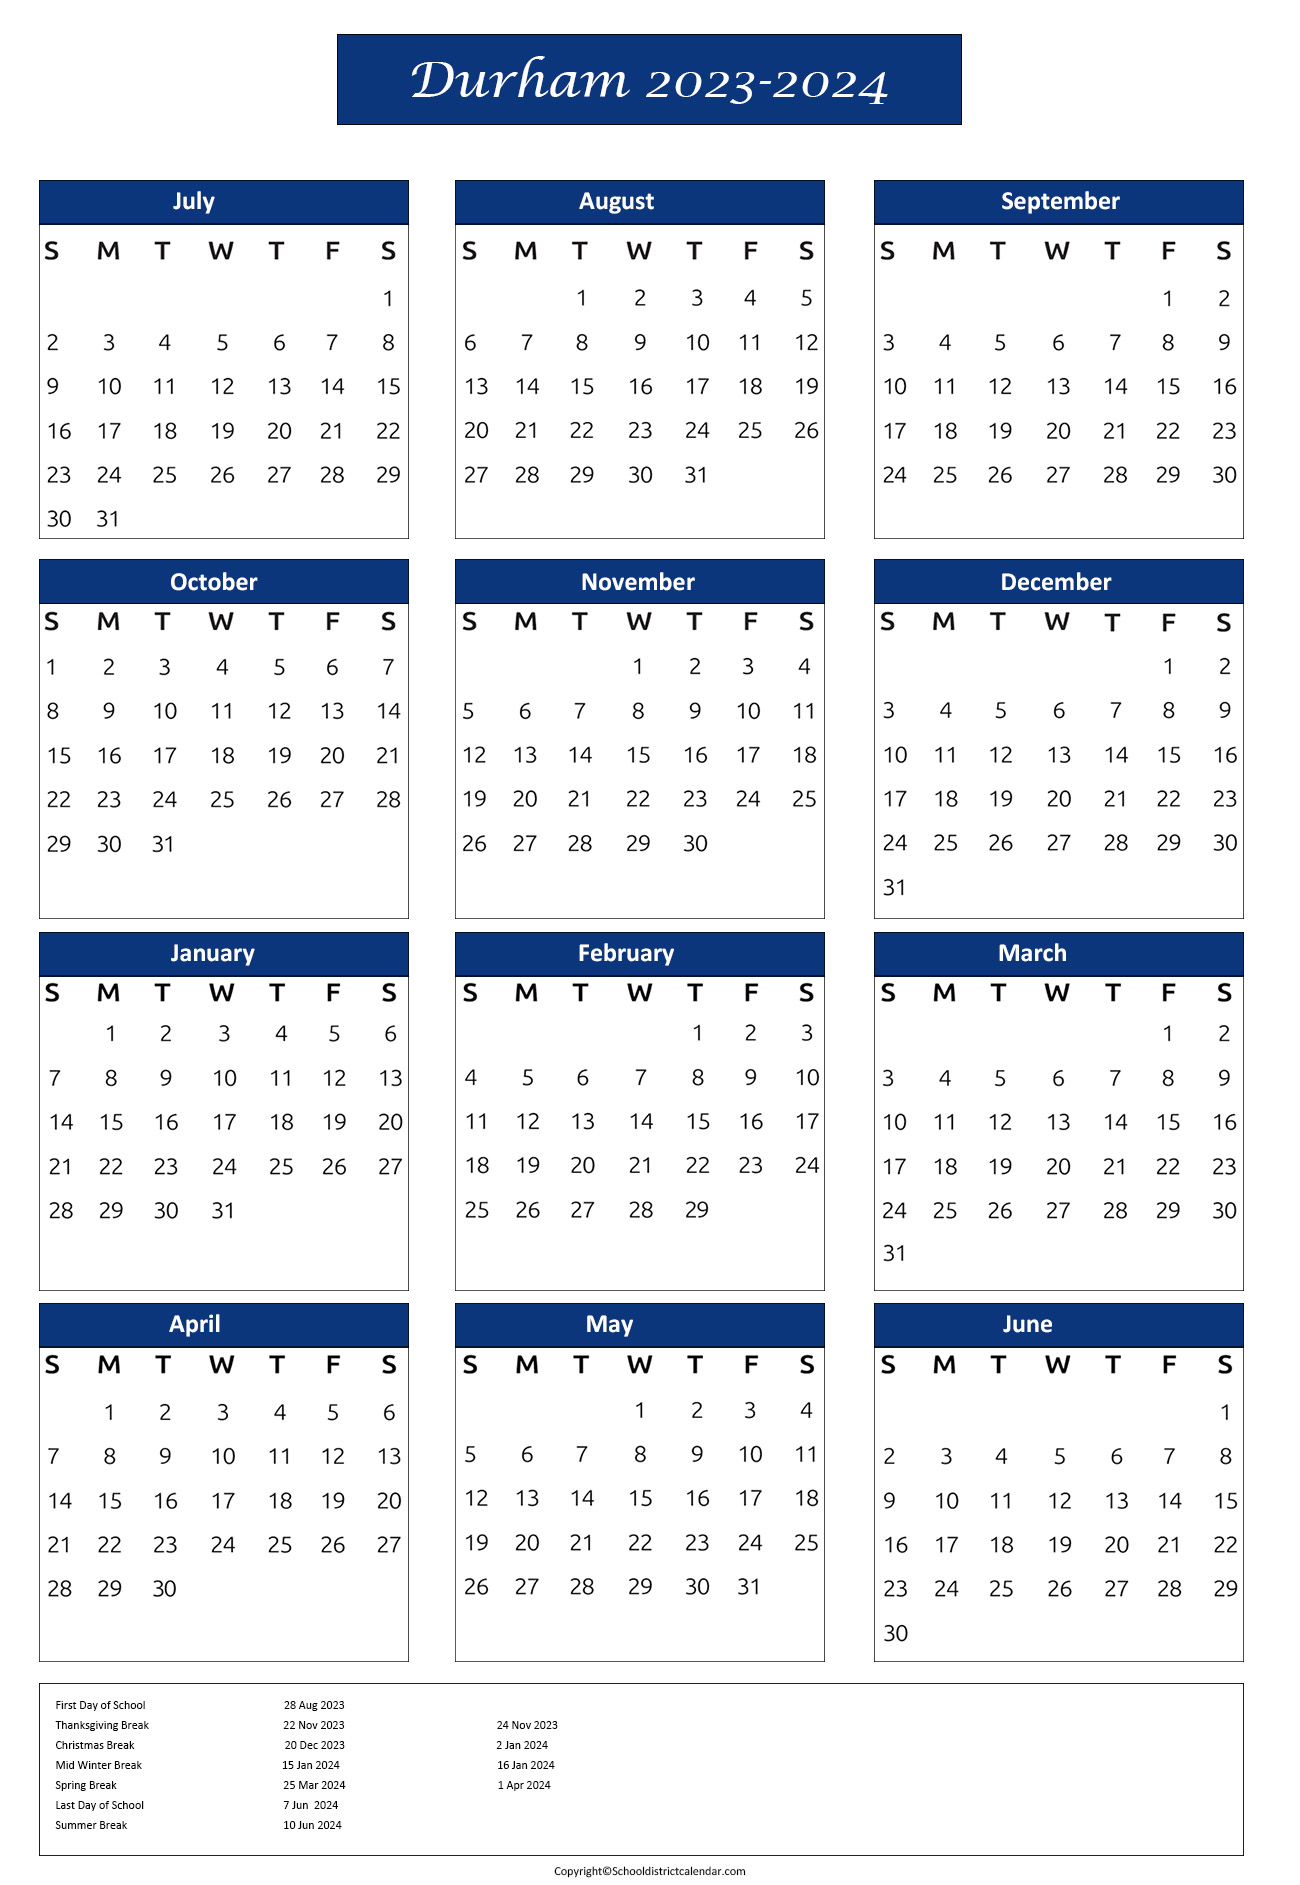 Durham Public Schools Calendar Holidays 20232024